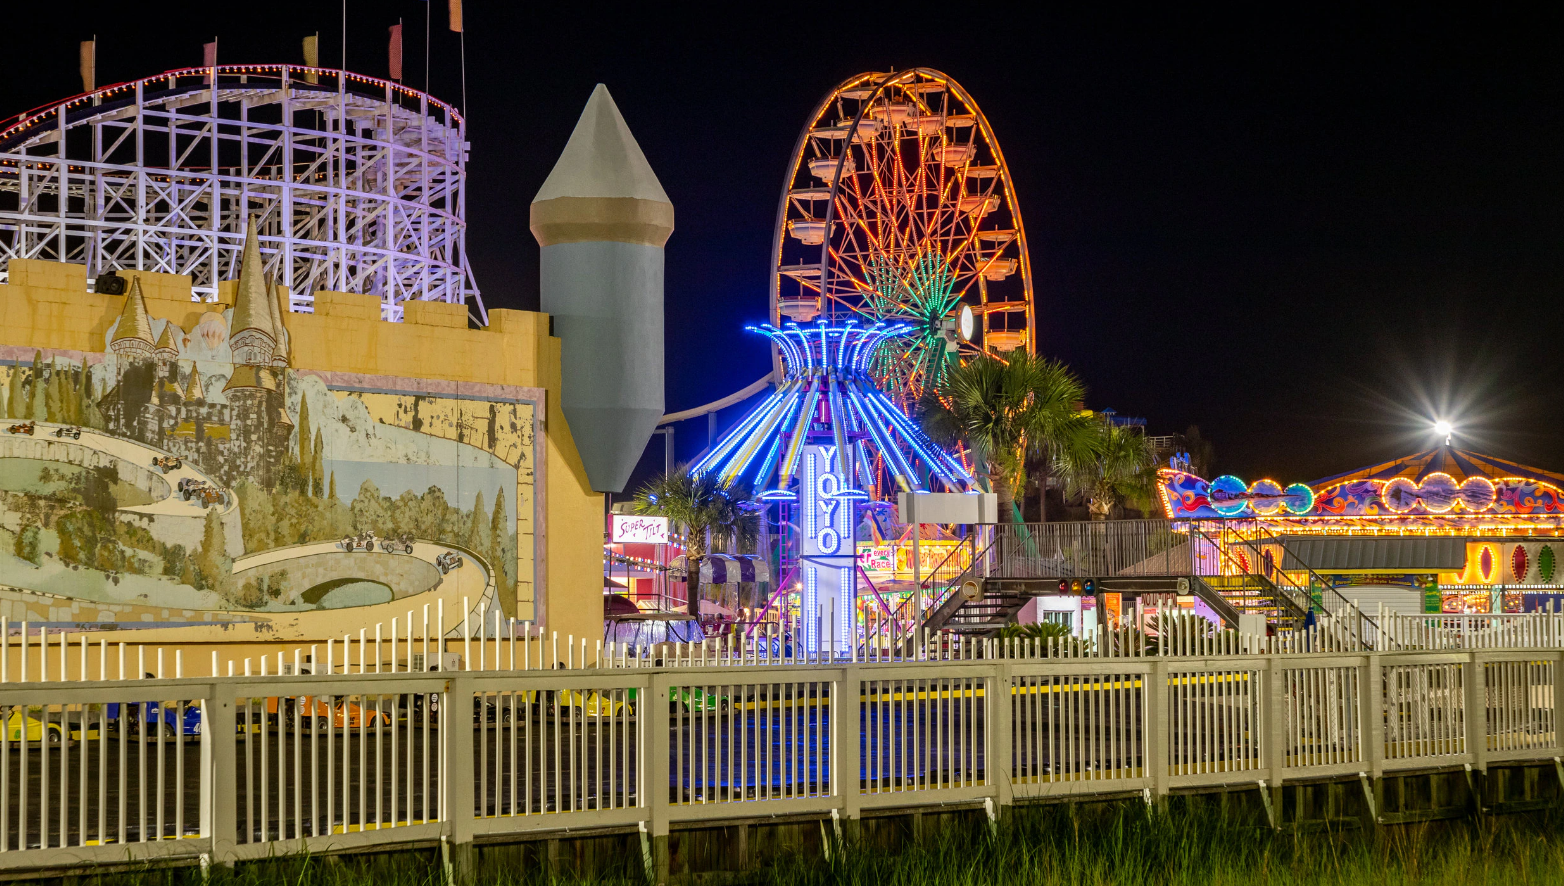 Family Kingdom amusement park in Myrtle Beach South Carolina